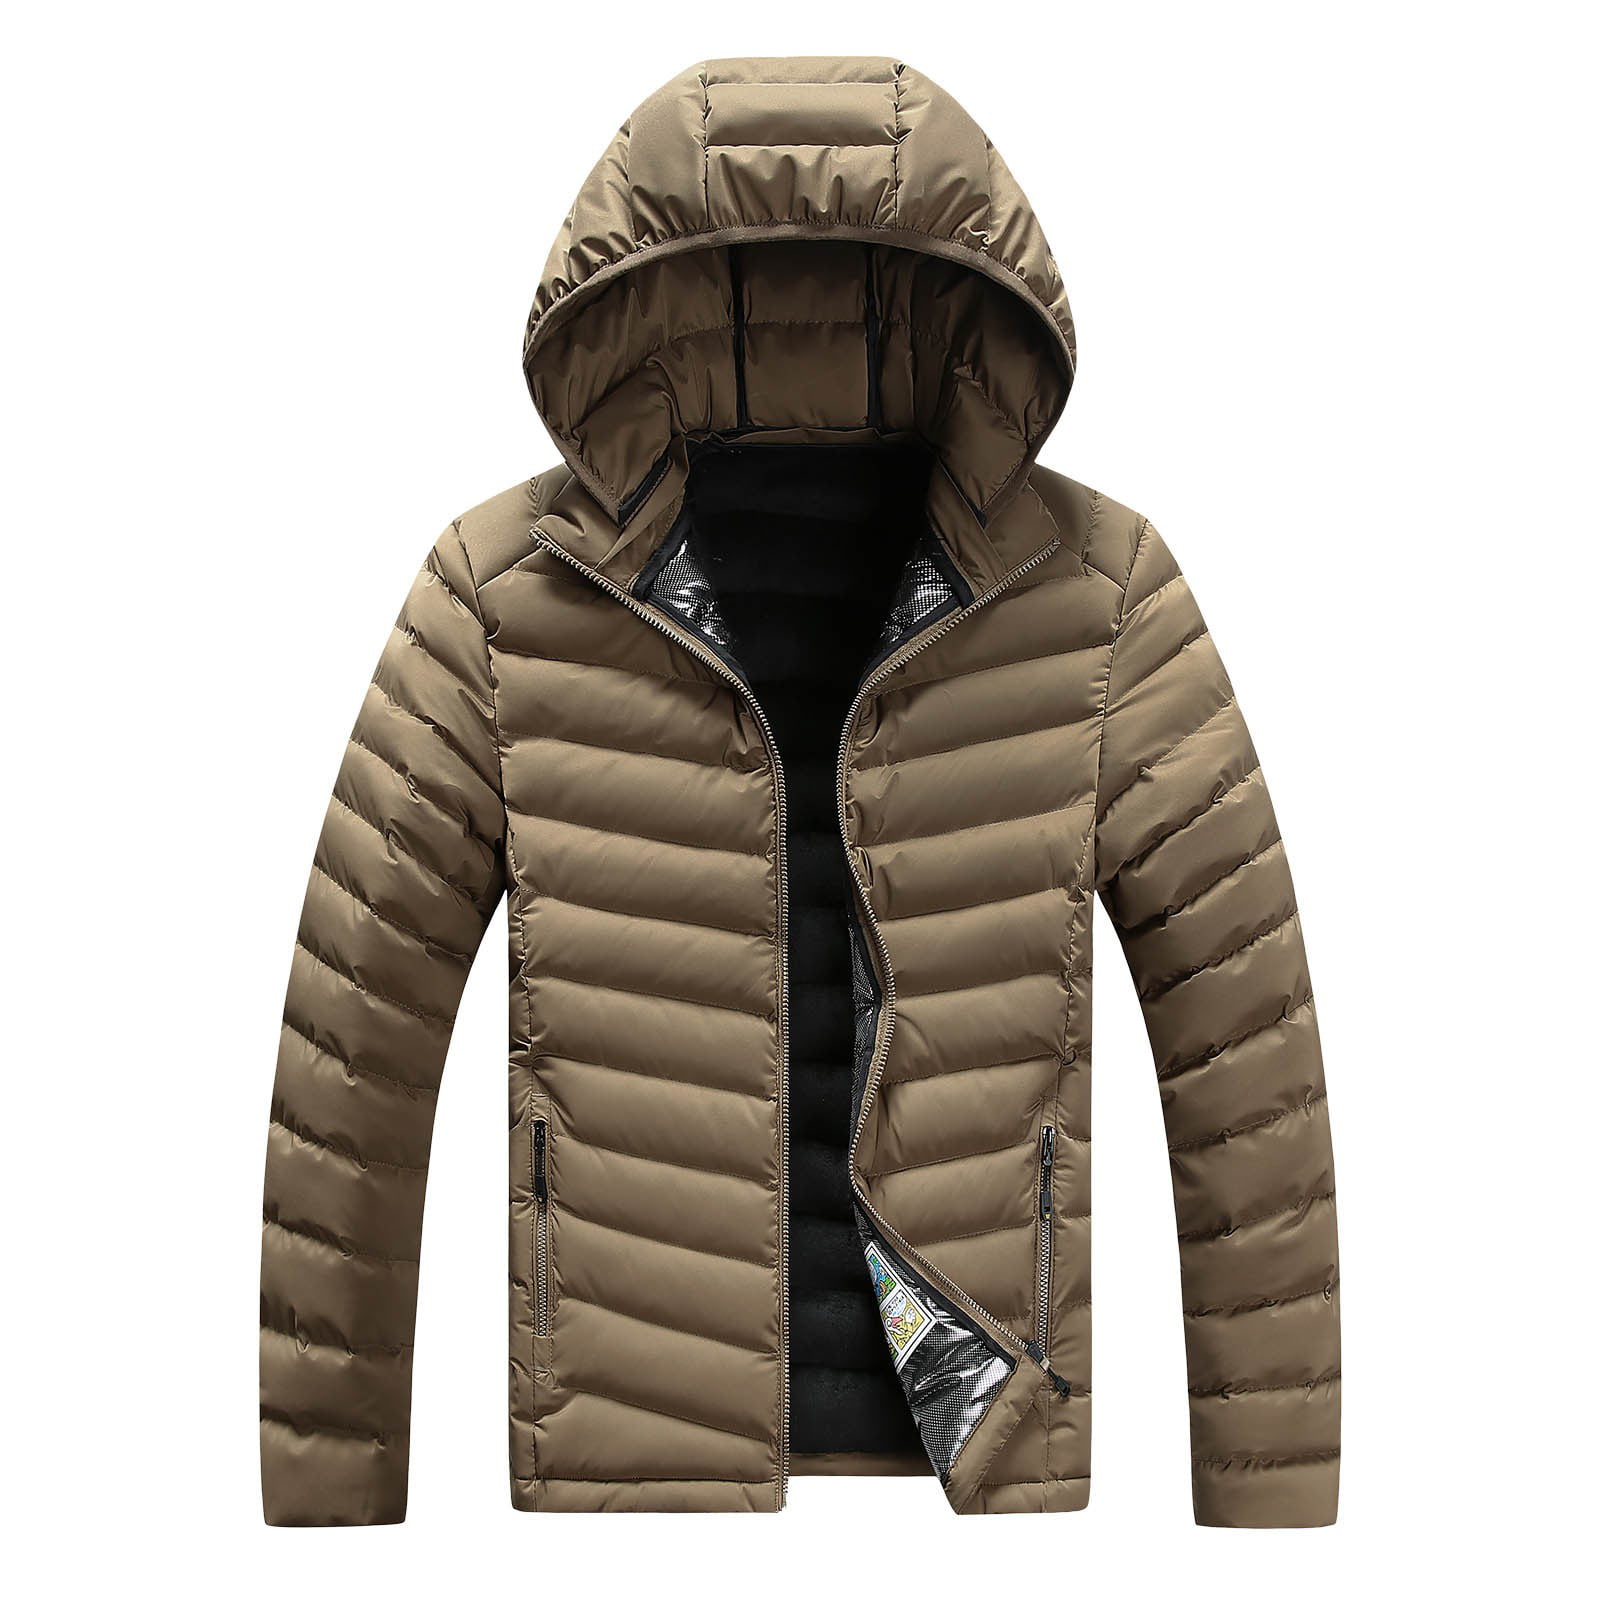 LEEy-world Long Winter Coats for Men Men's Jacket-Casual Winter Cotton  Jacket Thicken Hooded Cargo Coat Dark Blue,4XL 